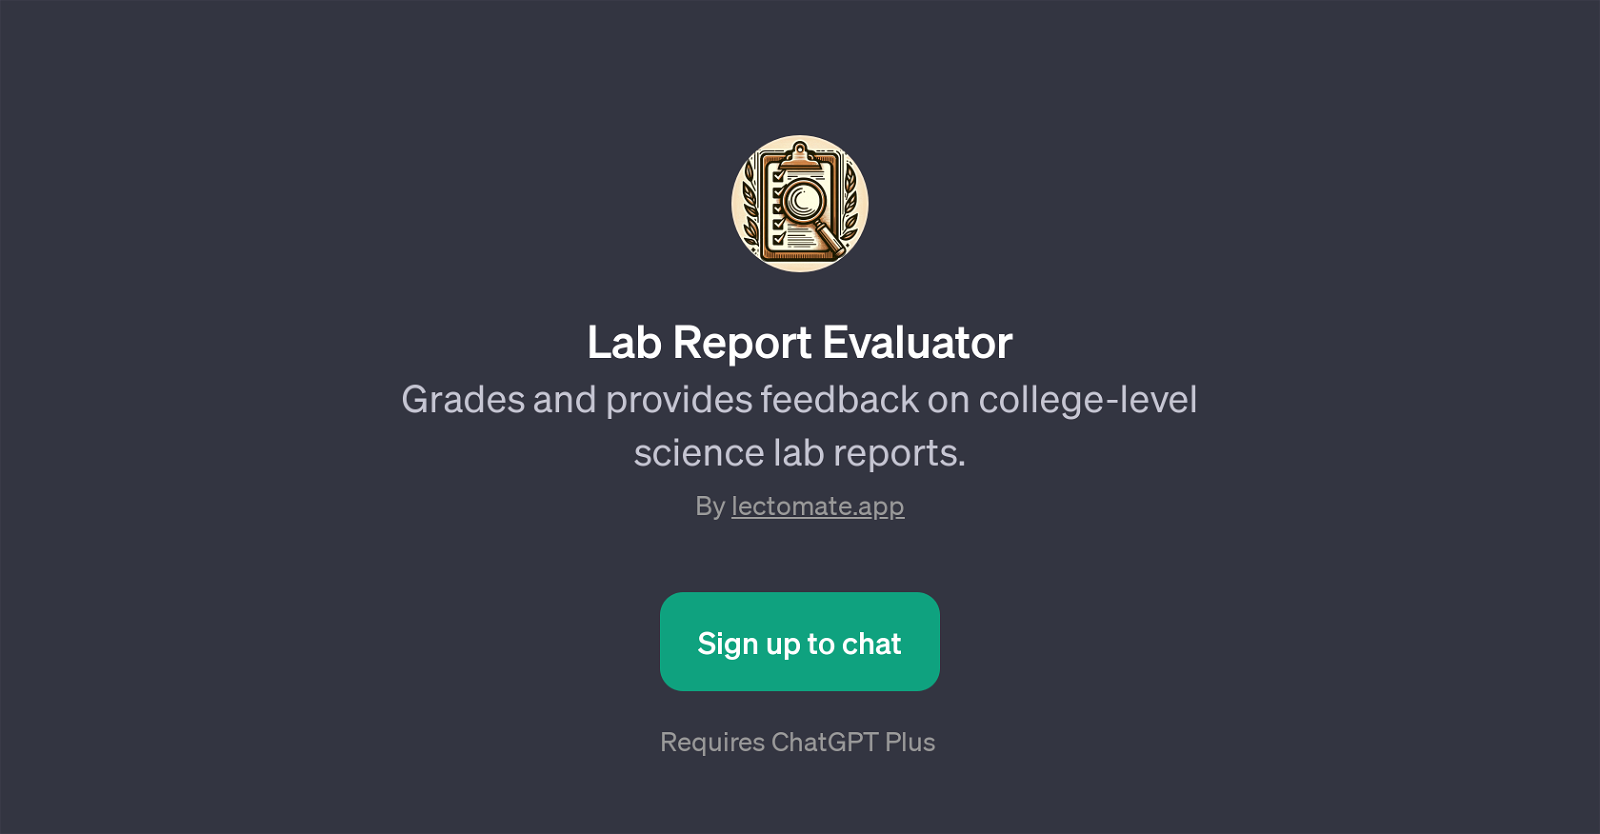 Lab Report Evaluator website